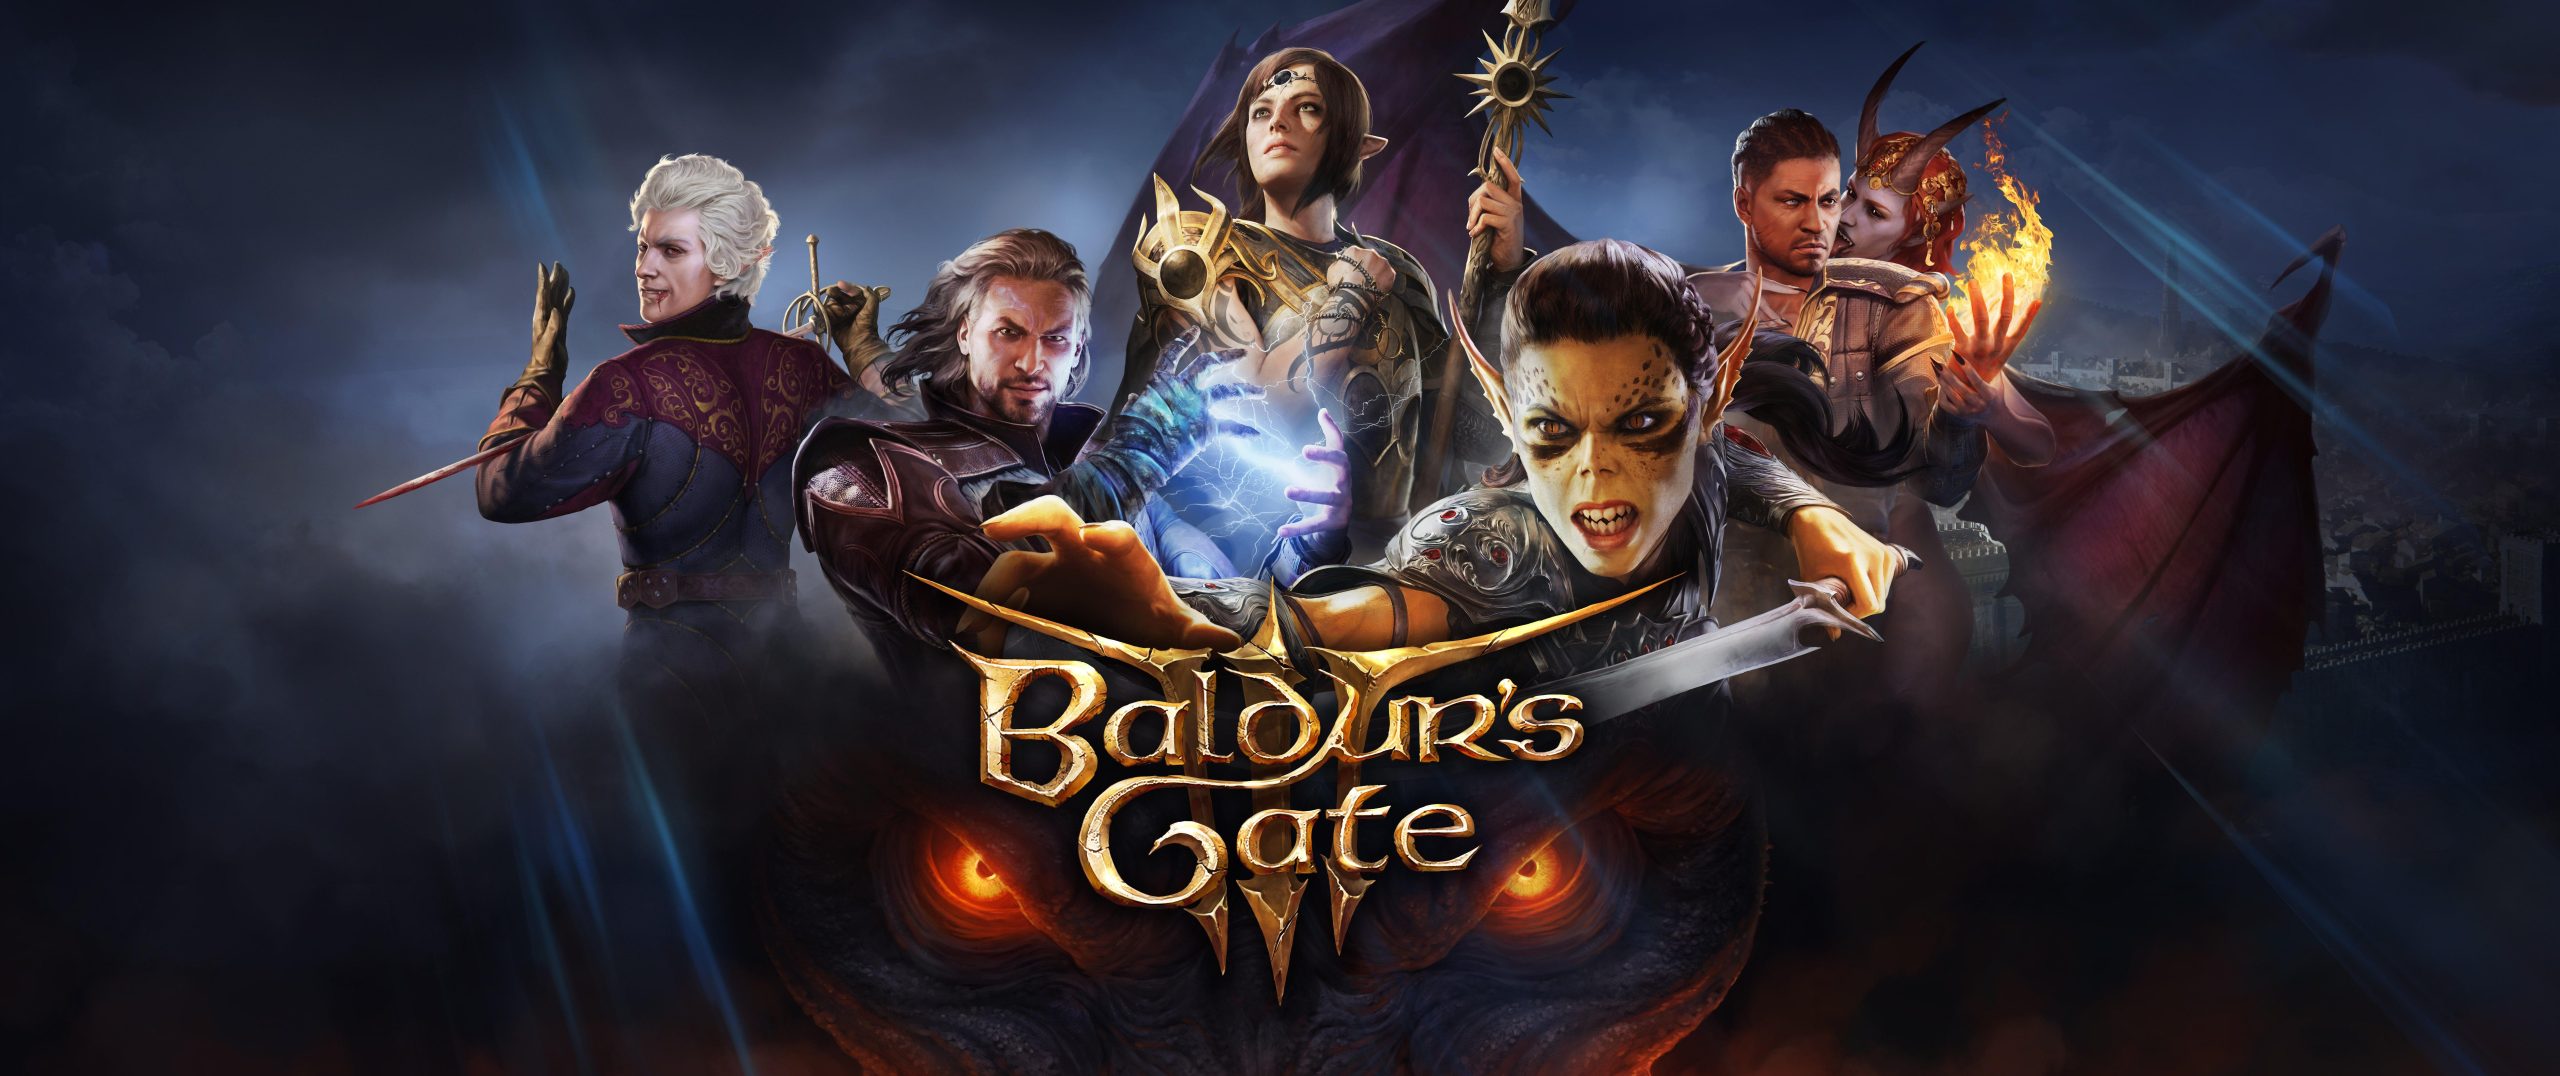 Baldur’s Gate 3 Wallpapers